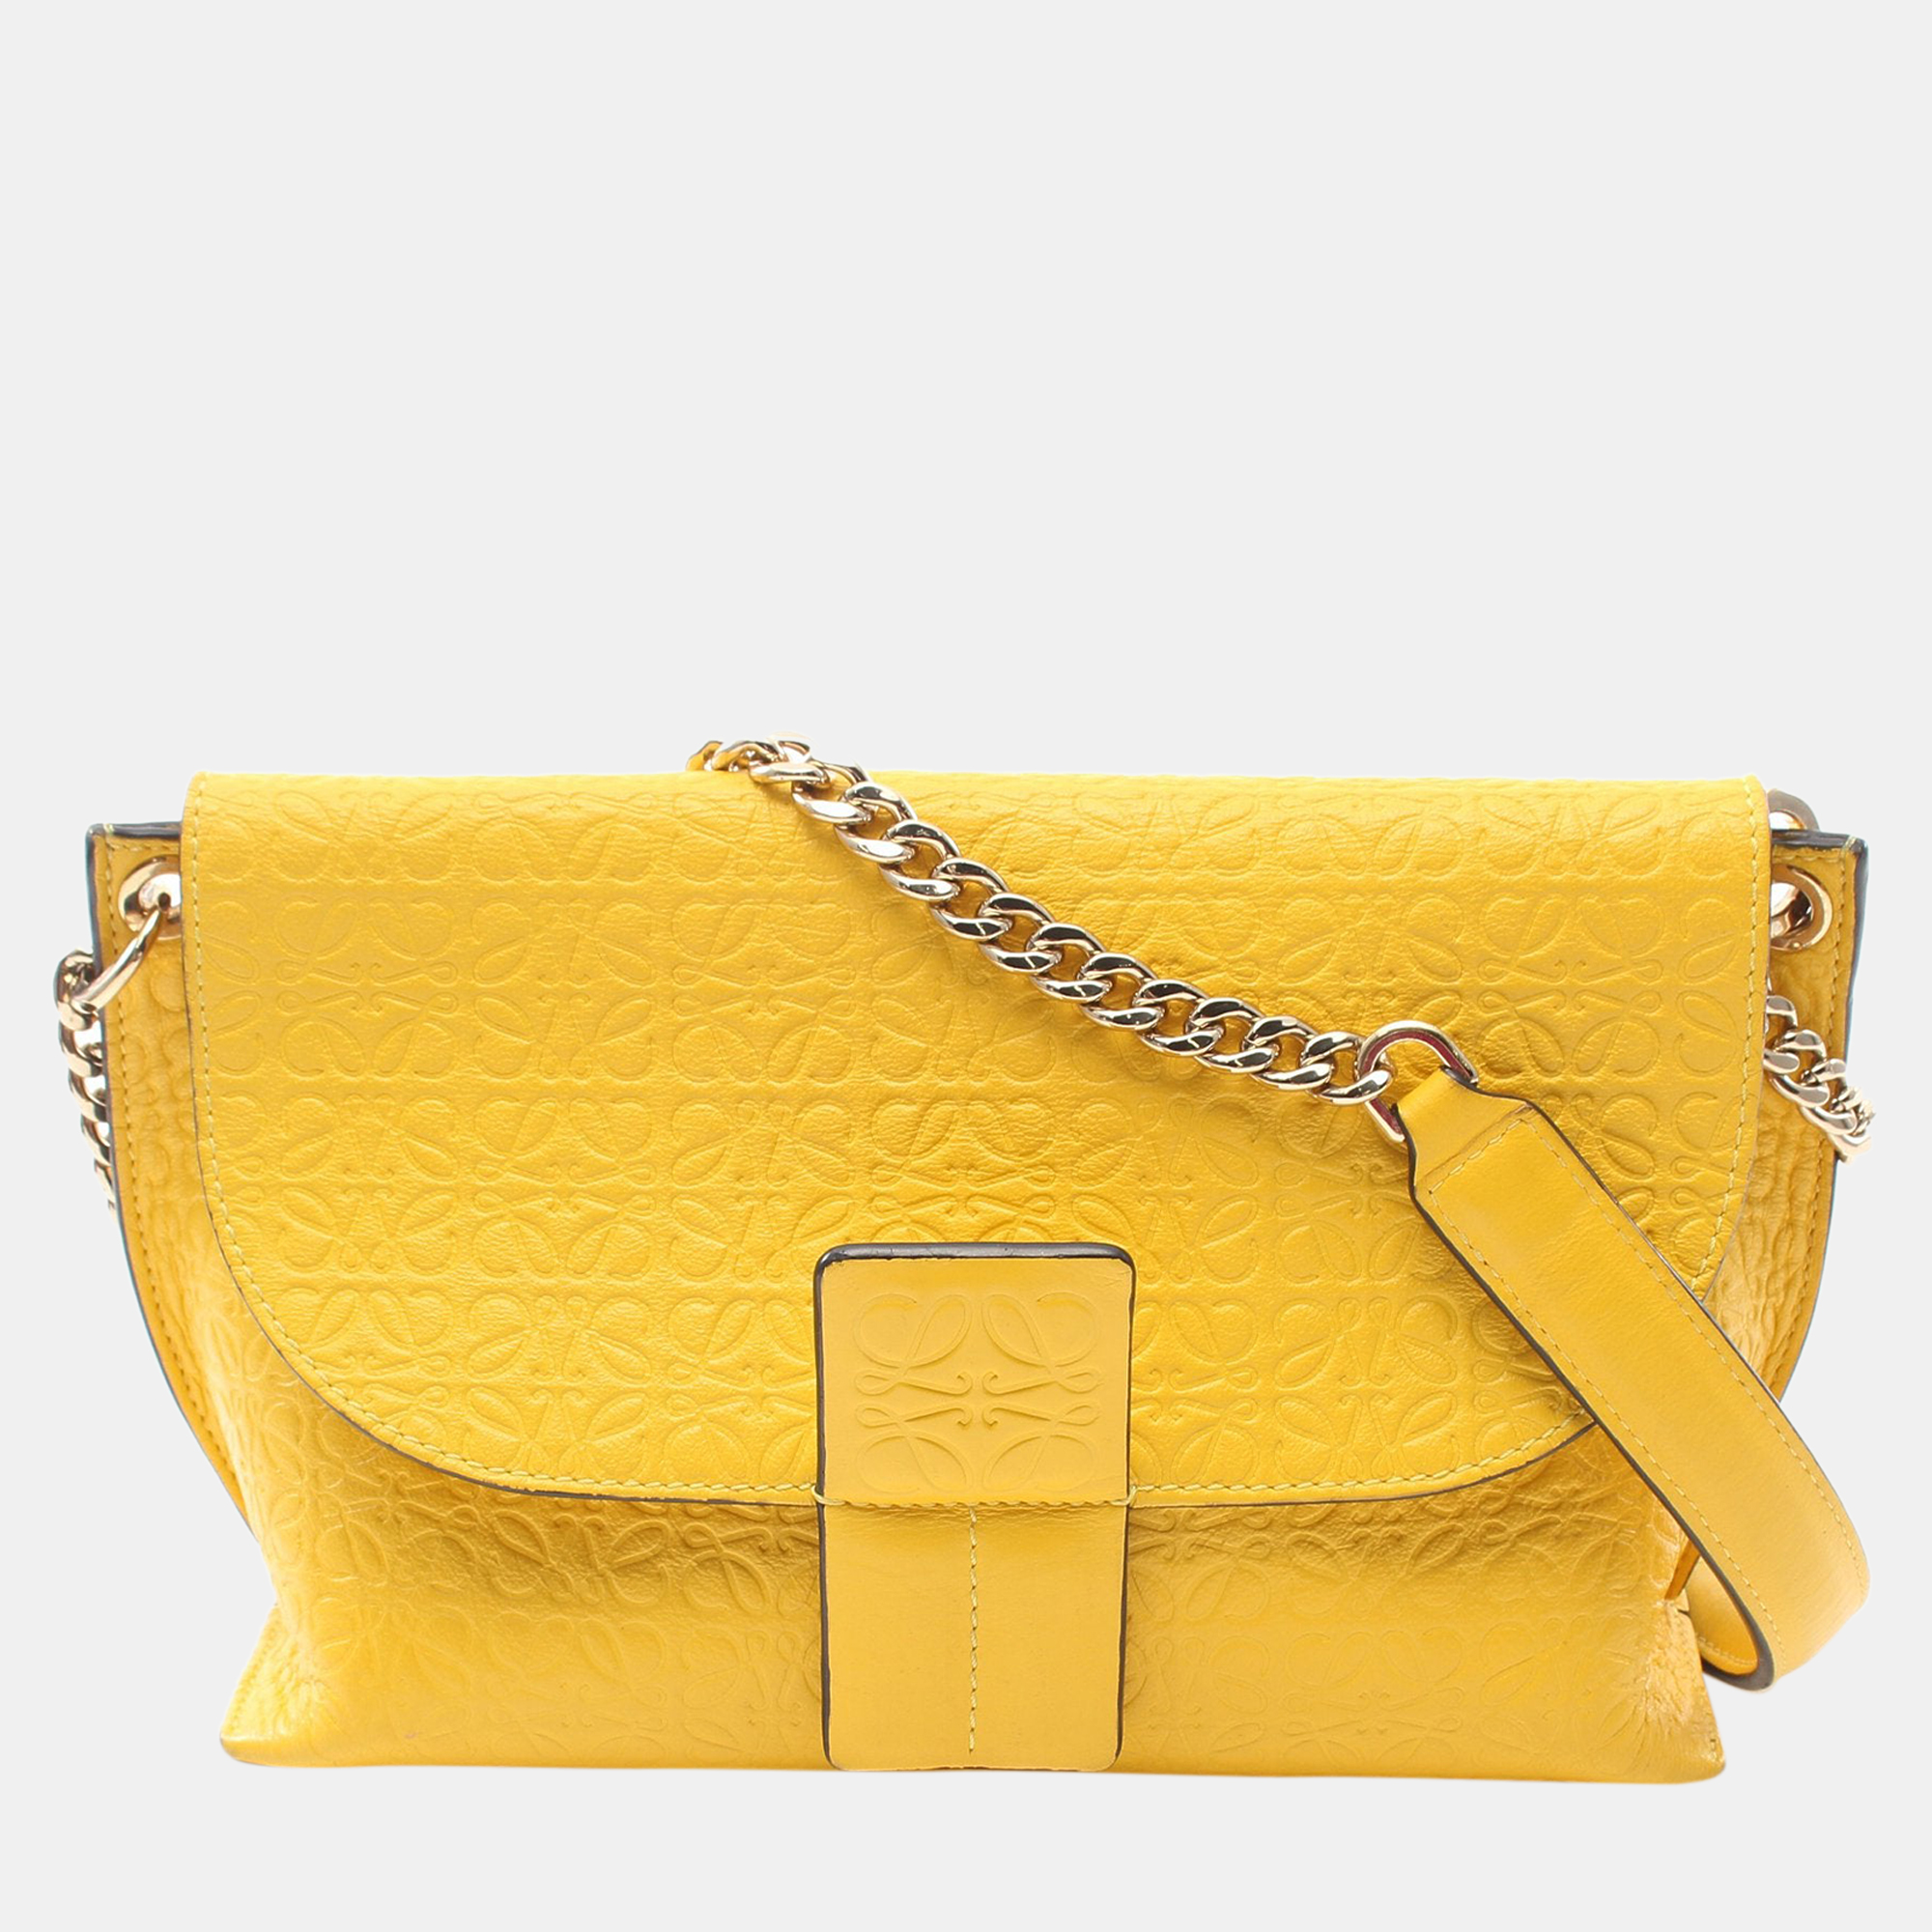 Loewe repeat anagram avenue chain shoulder bag leather yellow